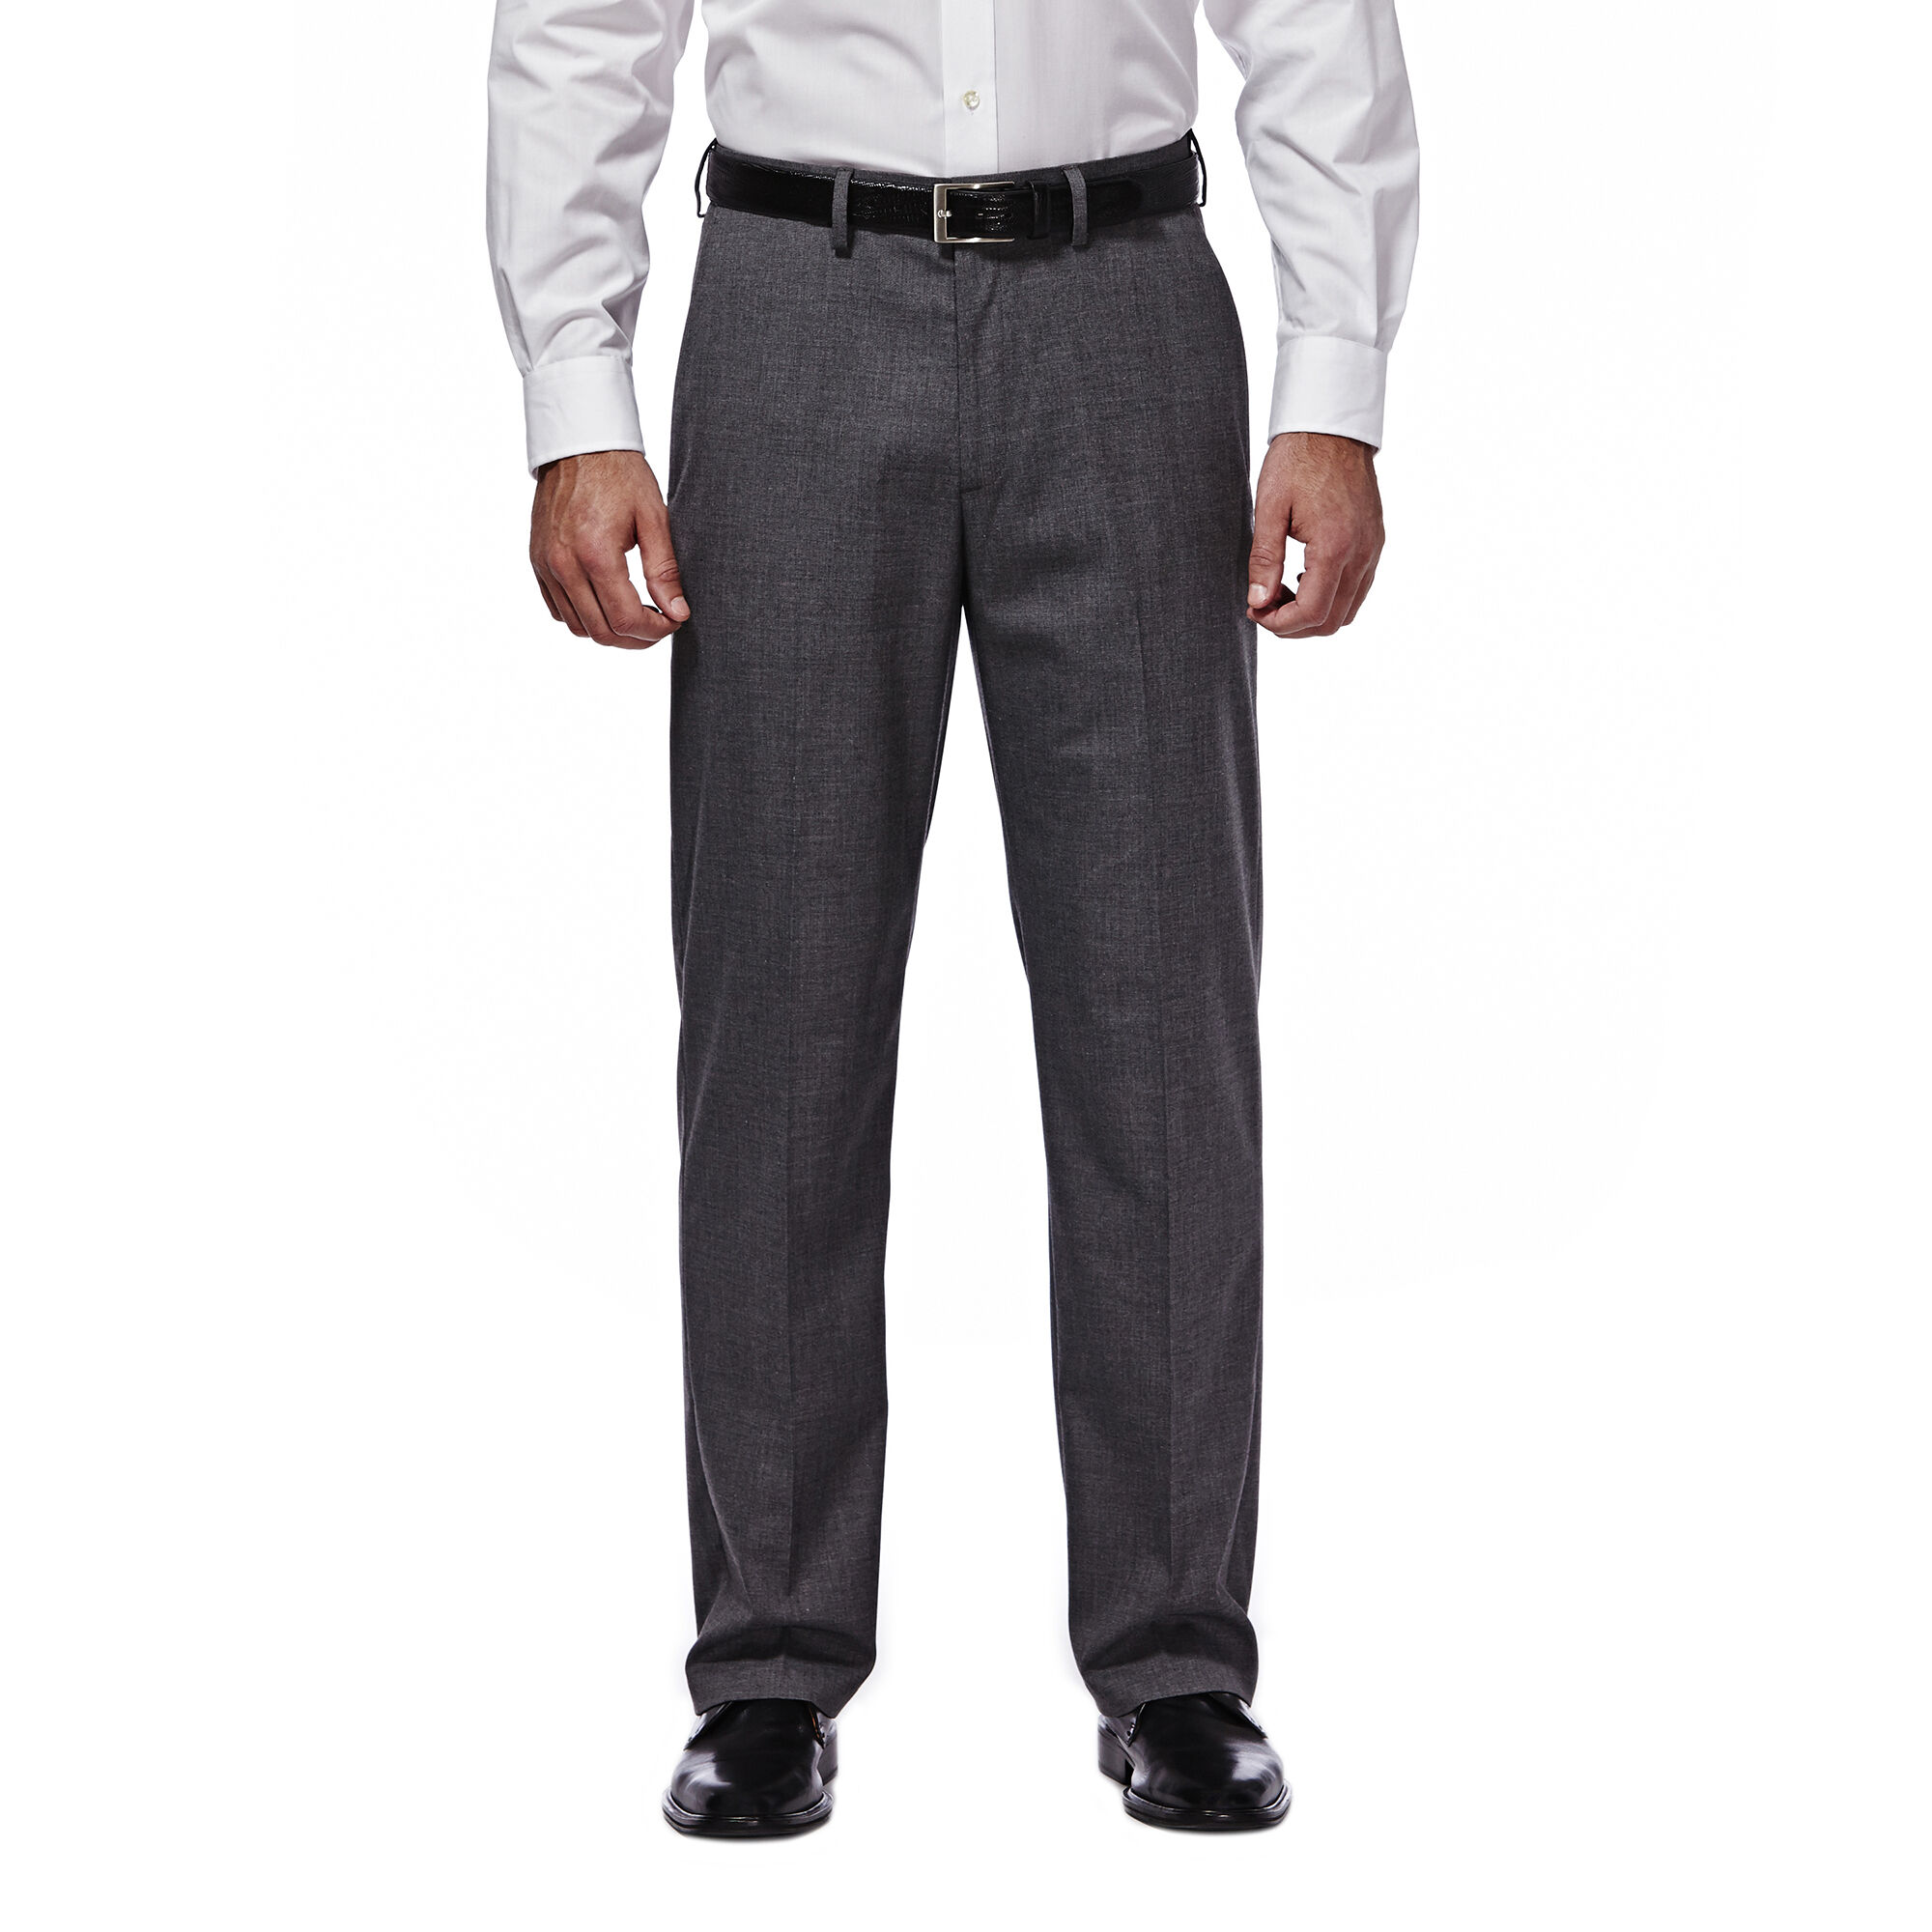 J.M. Haggar Premium Stretch Suit Pant - Flat Front Dark Heather Grey (HY00182 Clothing Pants) photo